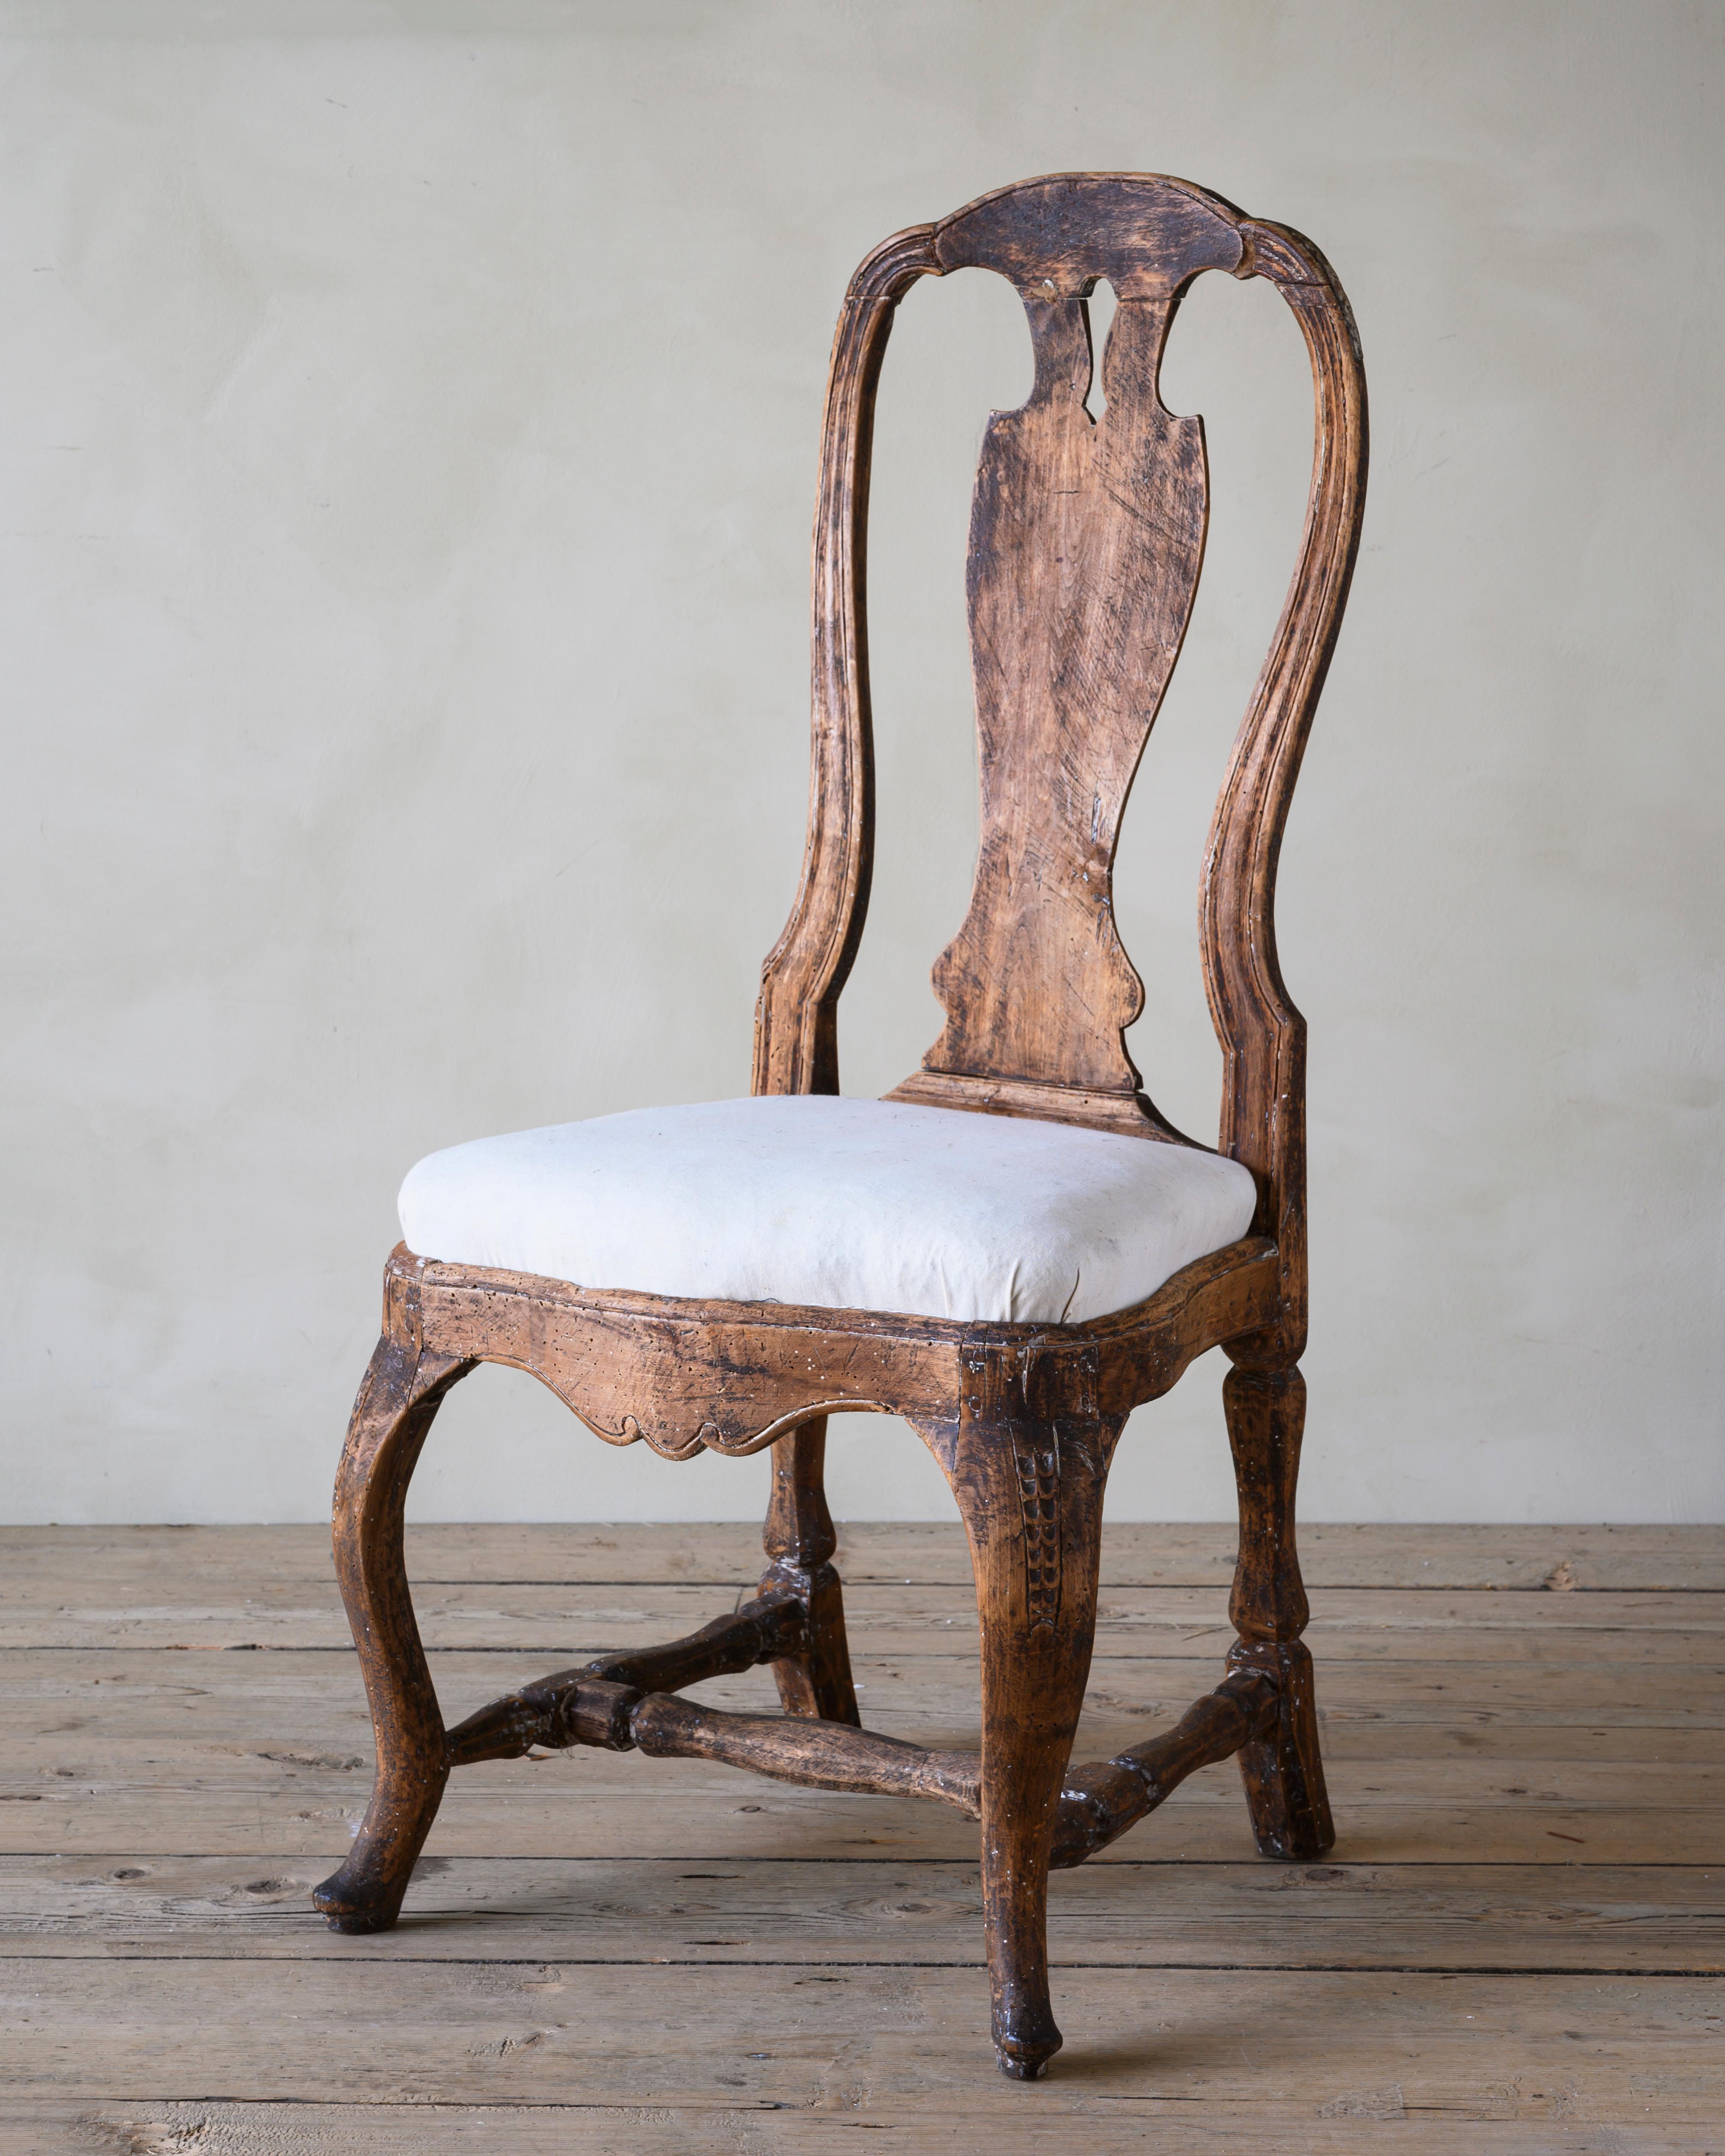 Hand-Crafted 18th Century Swedish Rococo Chair